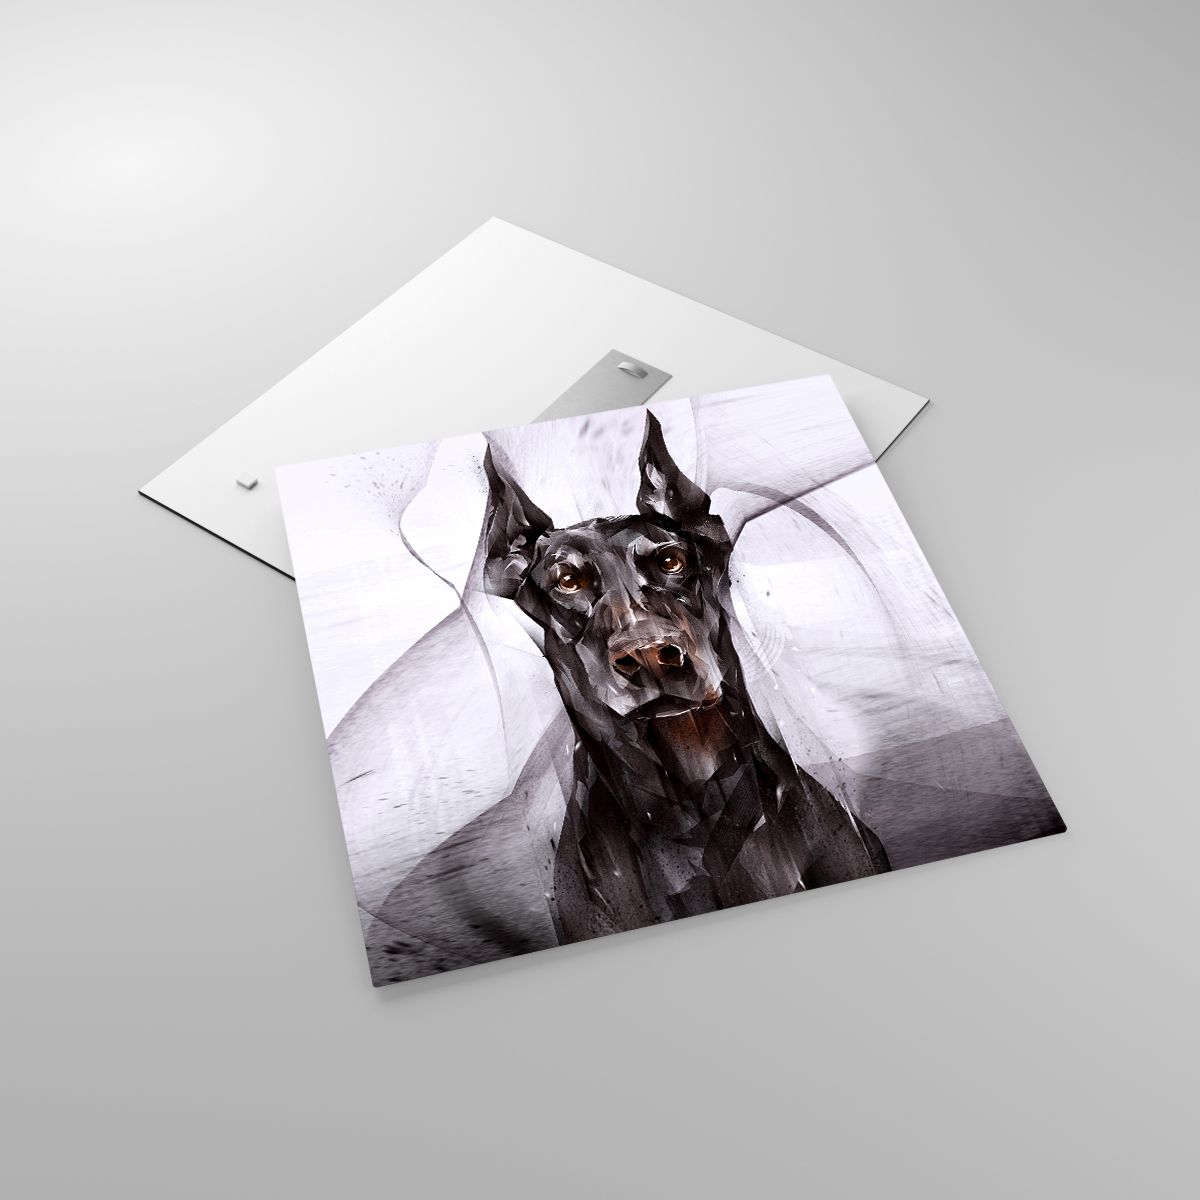 Glasbild Abstraktion, Glasbild Dobermann, Glasbild Hund, Glasbild Tiere, Glasbild Grafik